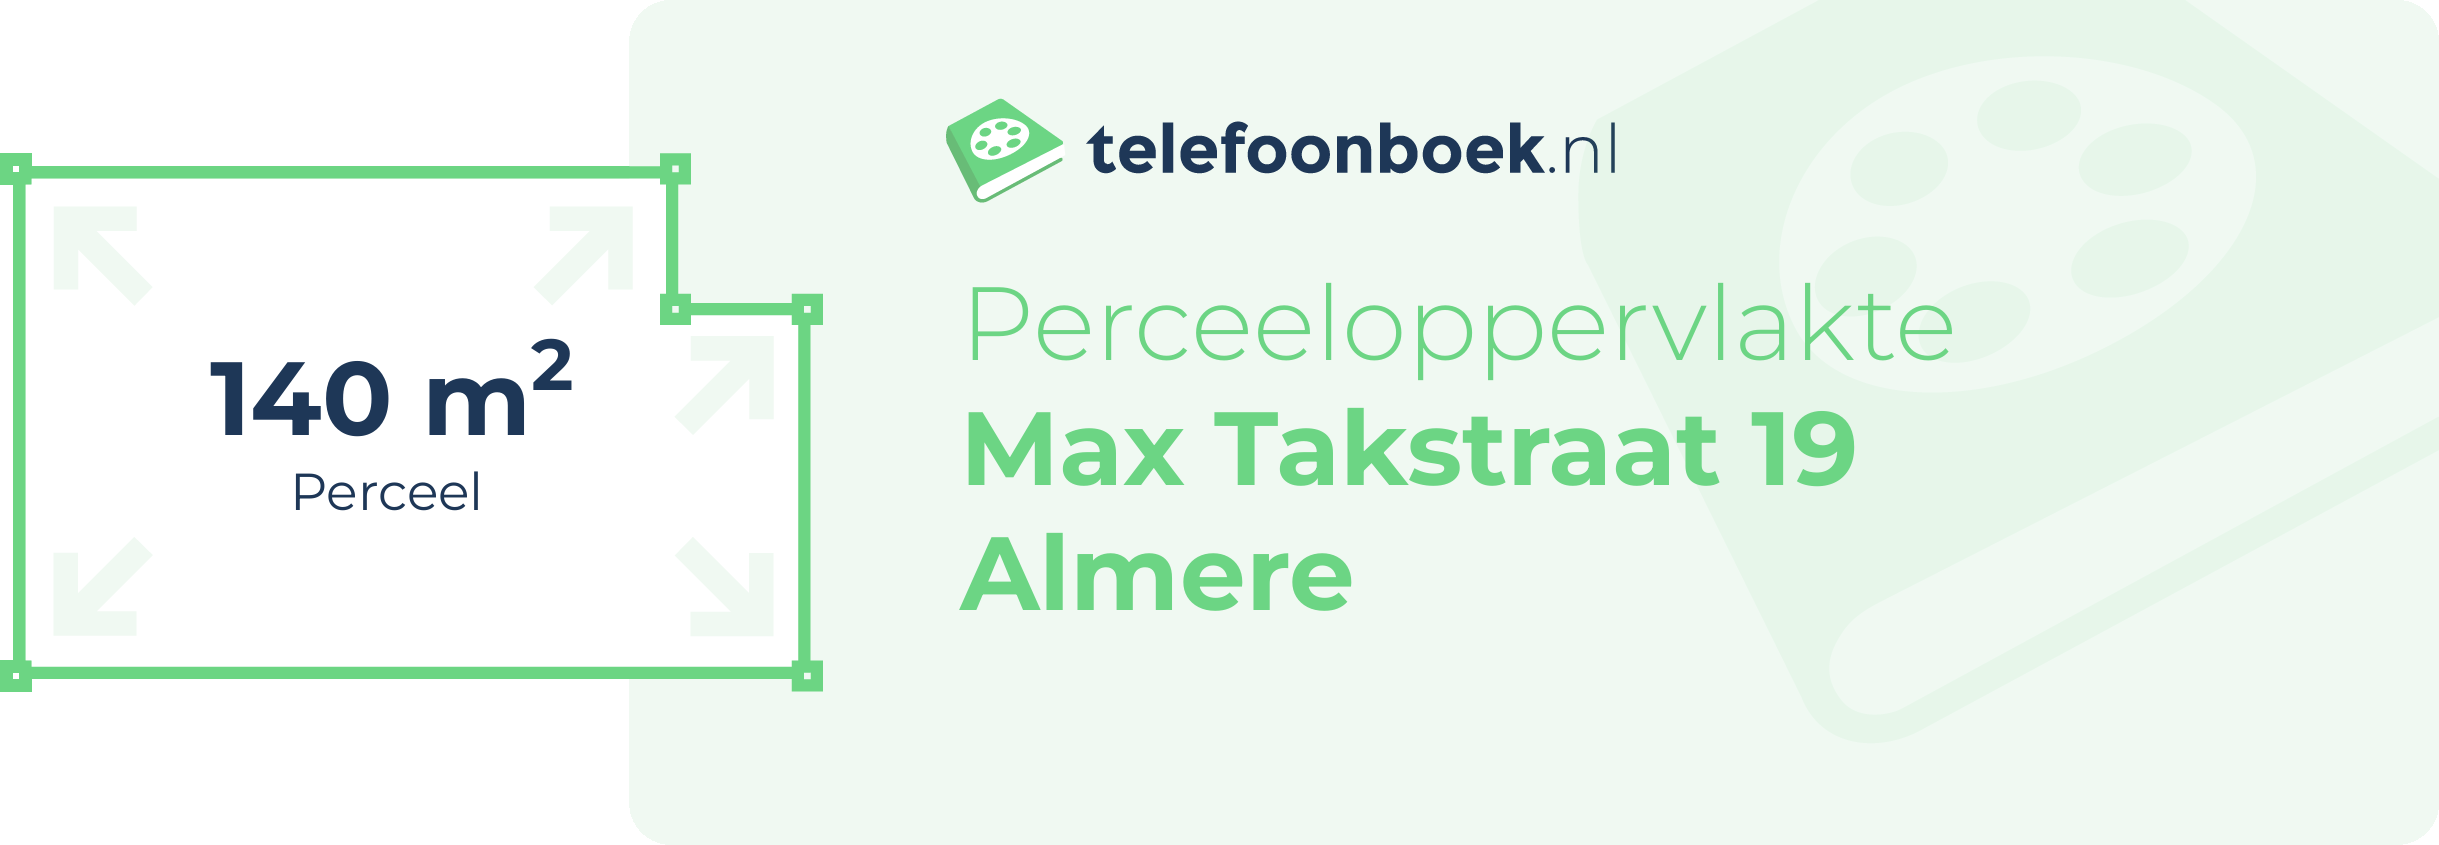 Perceeloppervlakte Max Takstraat 19 Almere